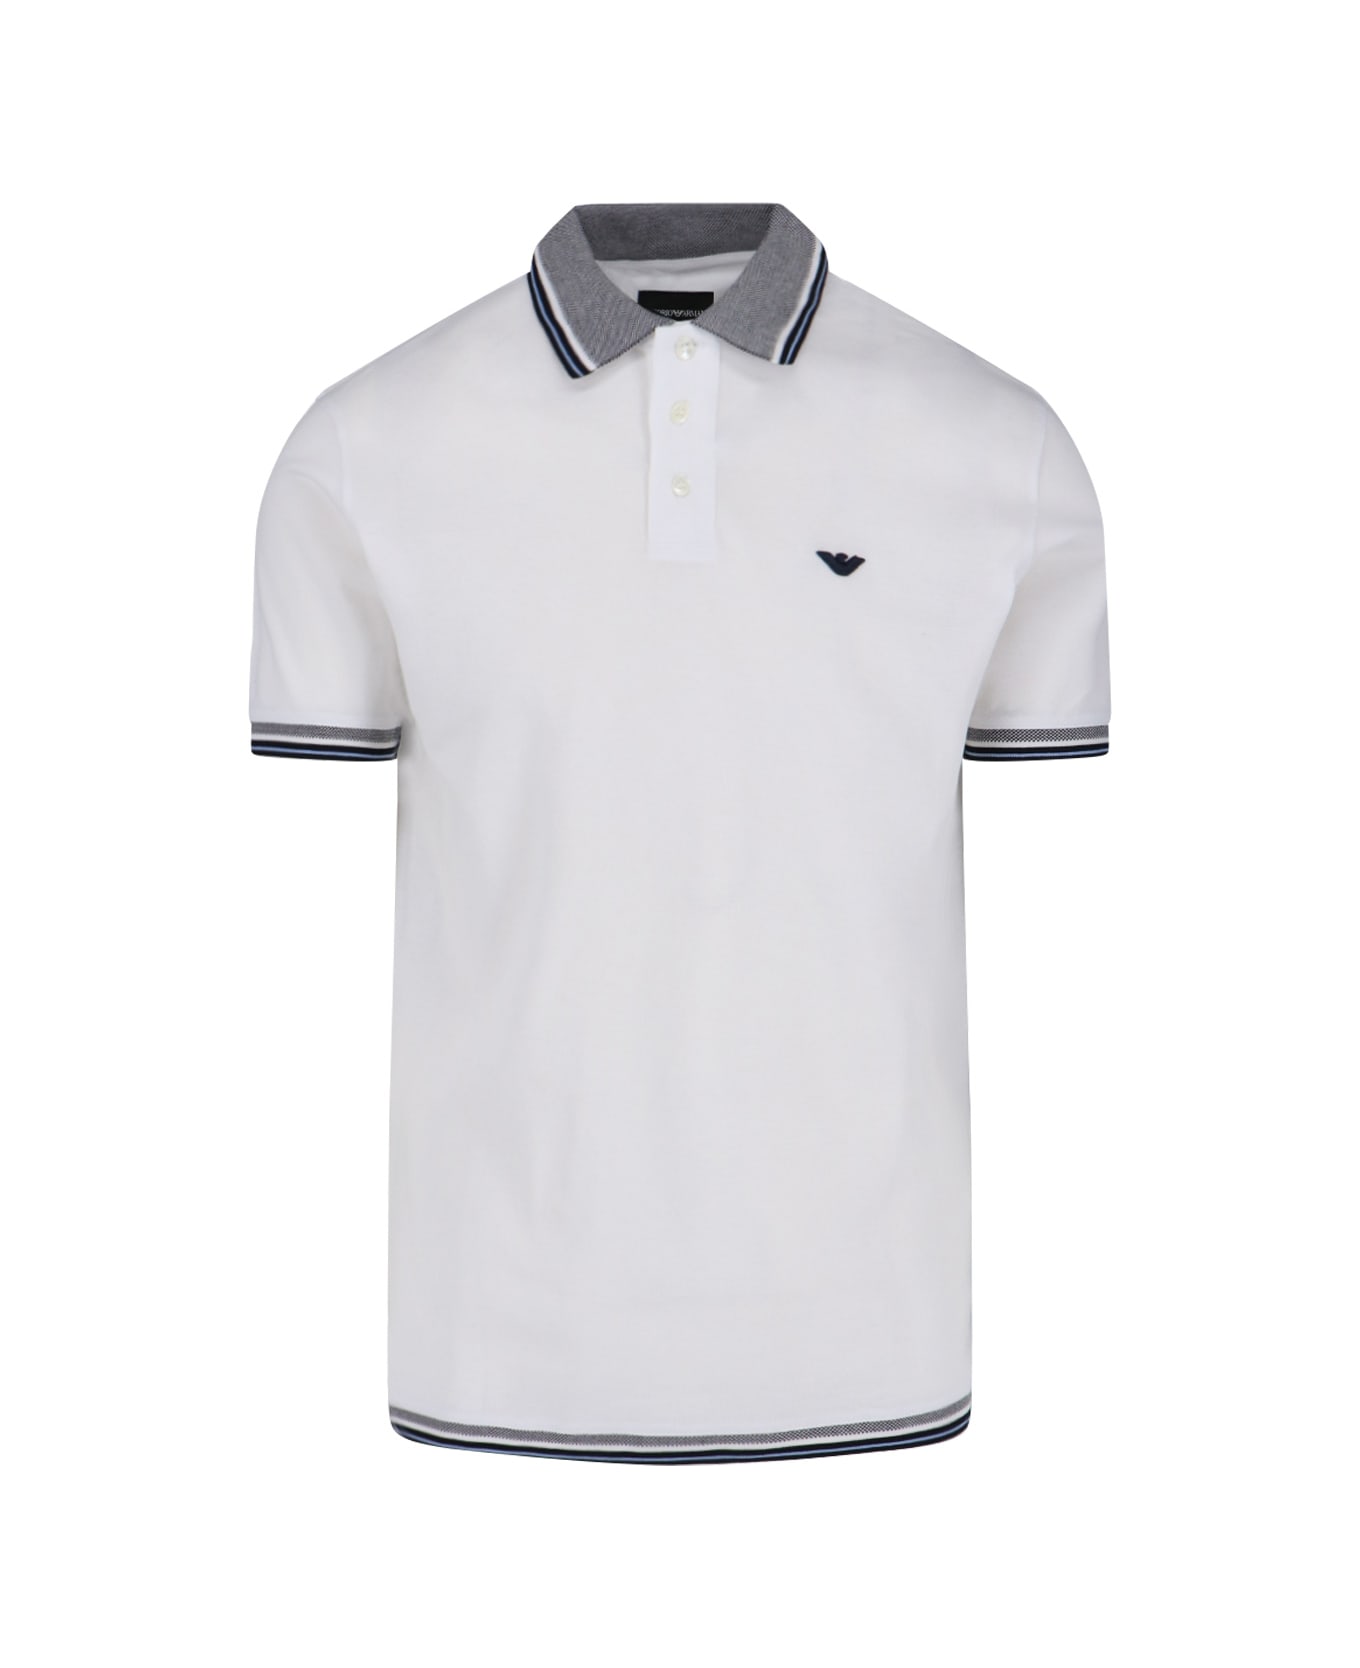 Emporio Armani Logo Polo Shirt - OFF WHITE